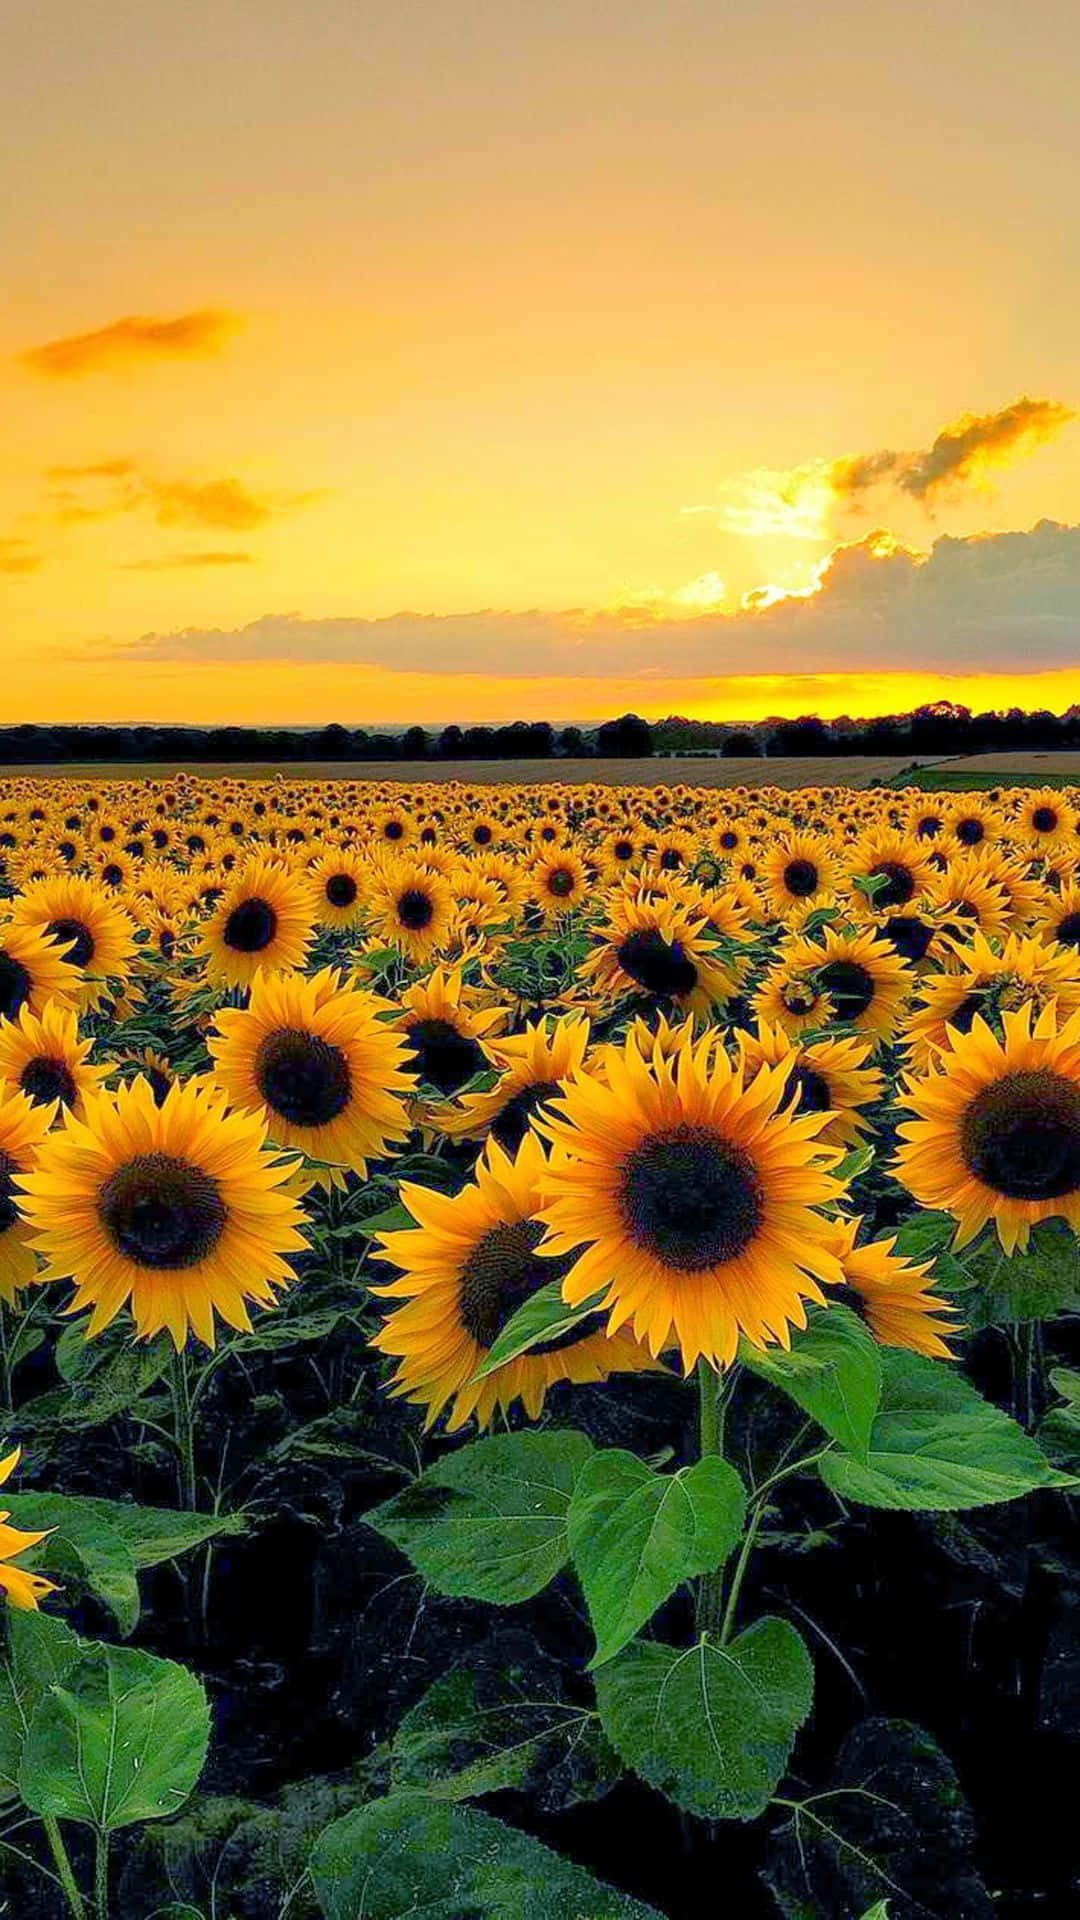 The beauty of nature, a cute sunflower Wallpaper